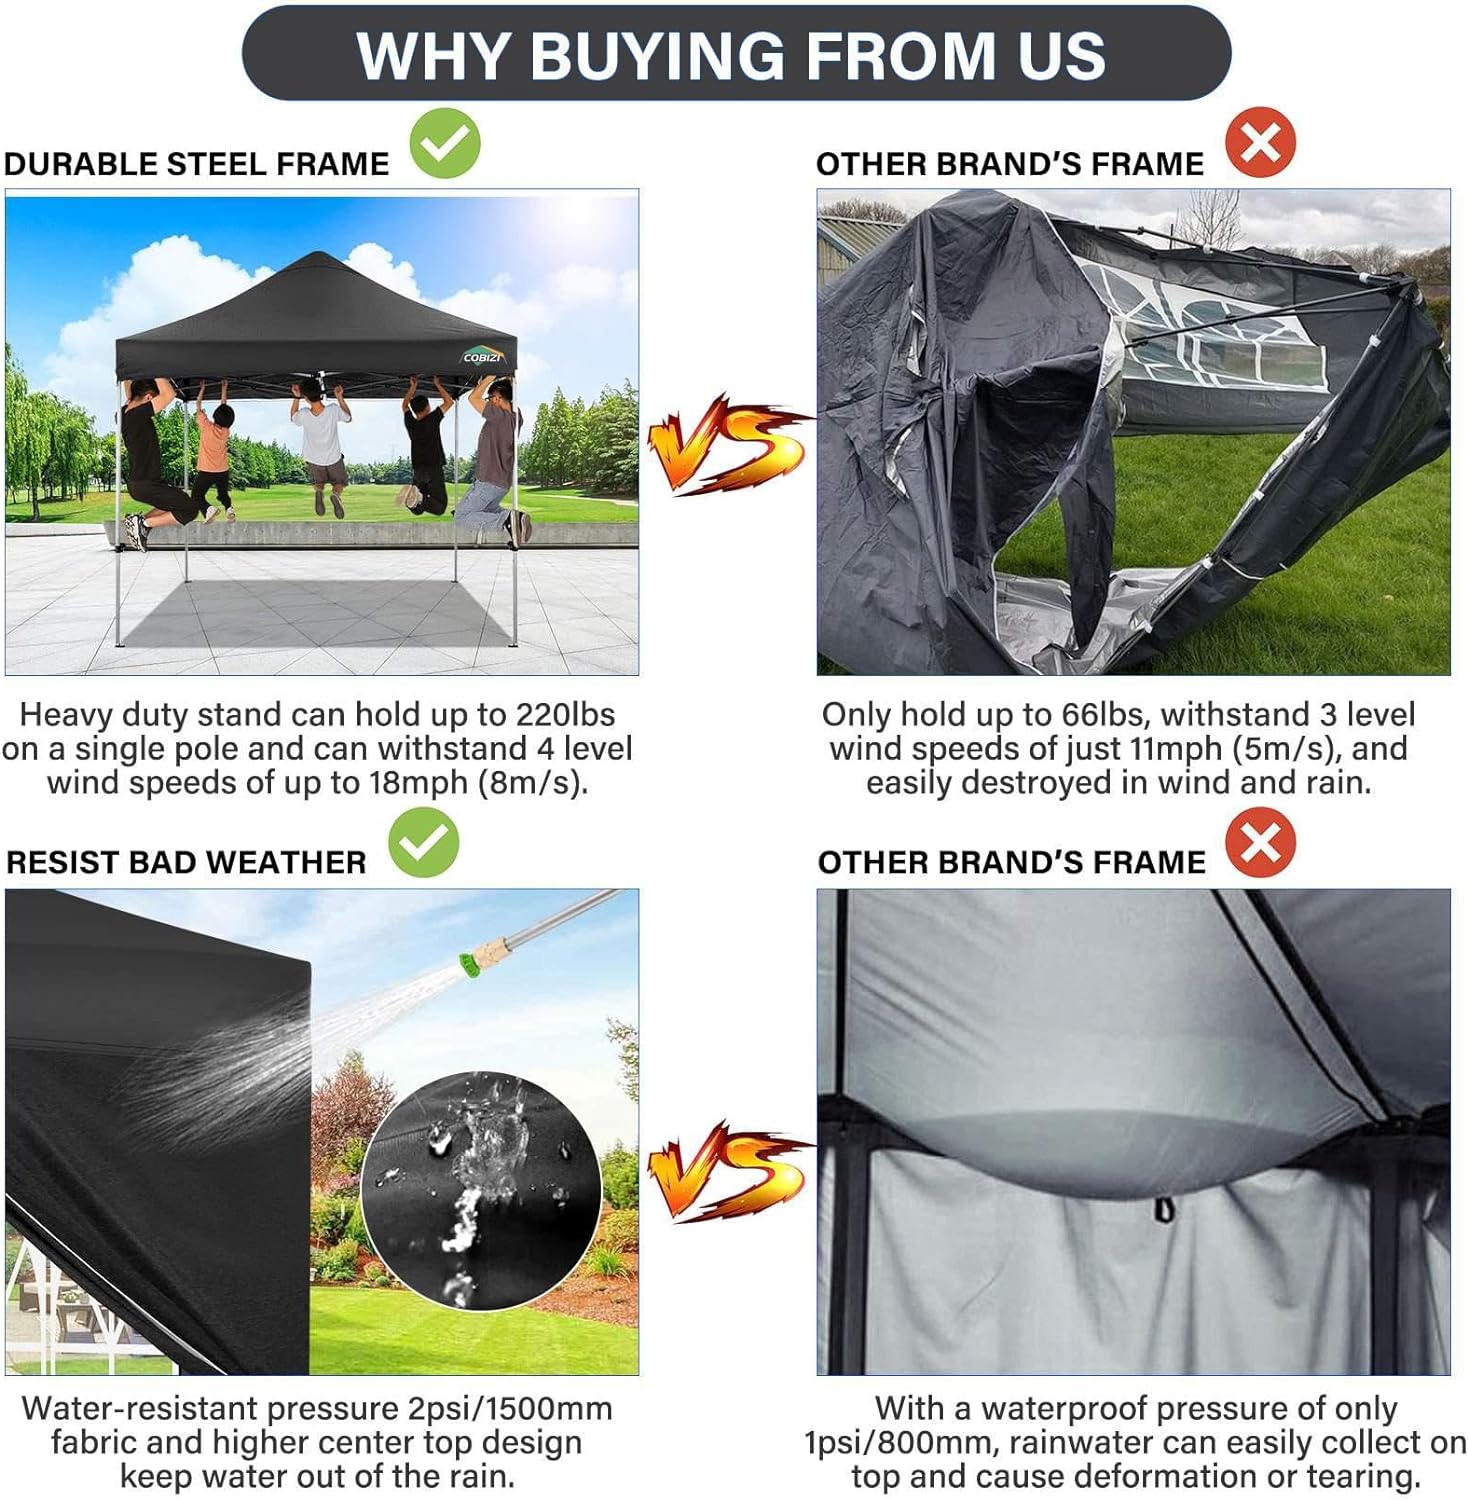 COBIZI 10x10 Pop up Canopy Tent 10x10 Canopy with 4 Sidewalls Waterproof Heavy Duty - $205